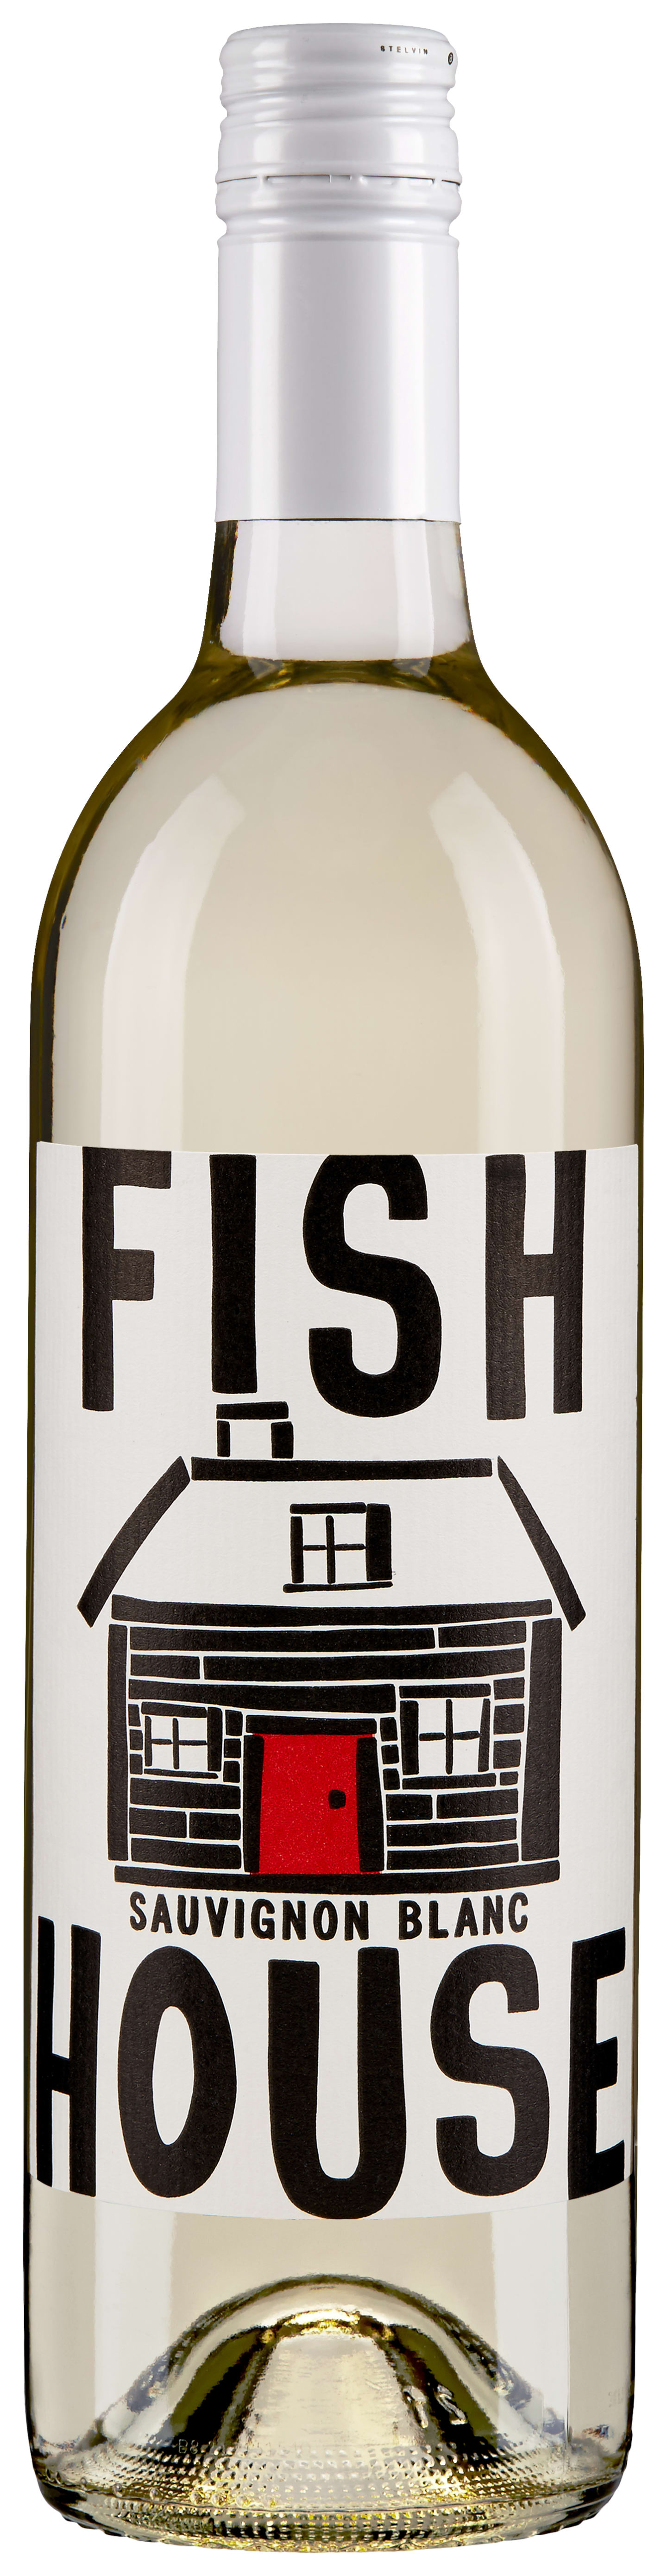 Fish House Sauvignon Blanc 2017